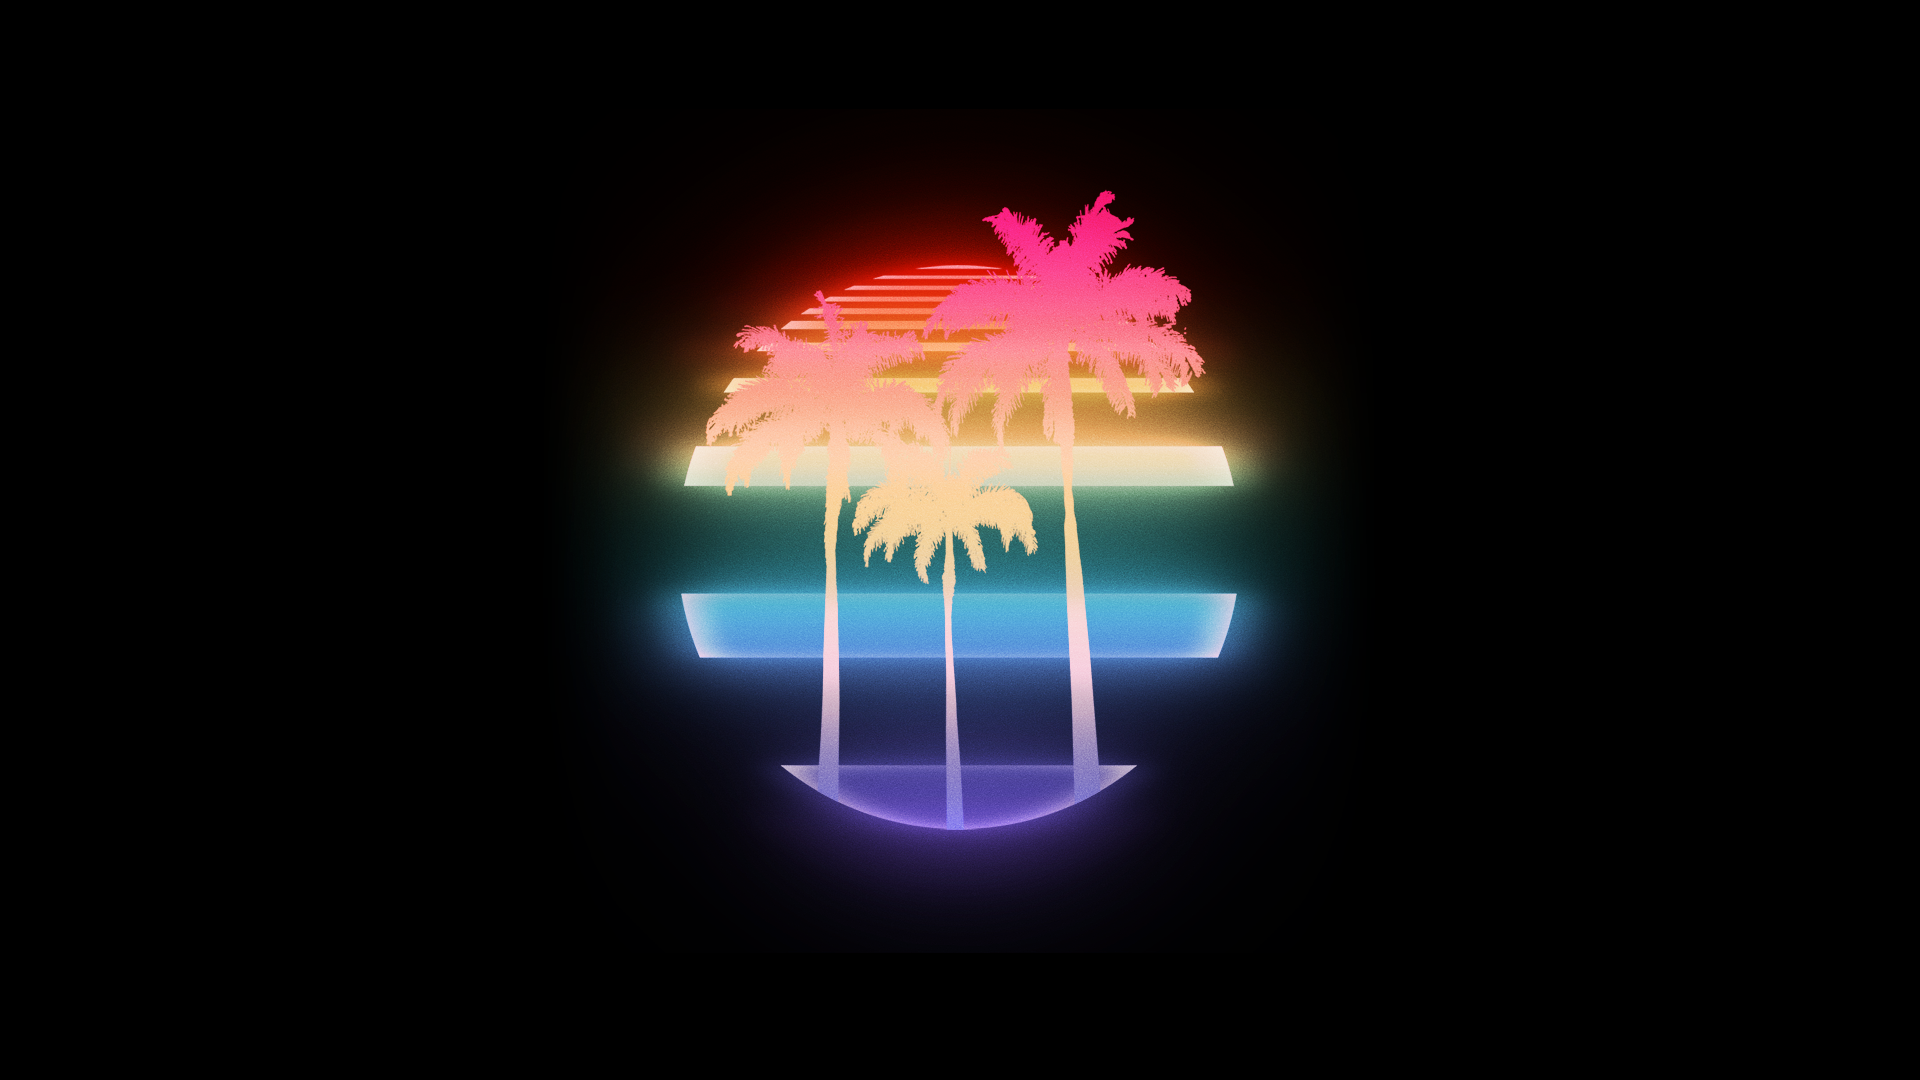 General 1920x1080 VHS palm trees 1980s New Retro Wave retro style vintage sunset vaporwave neon Grand Theft Auto: Vice City digital art minimalism video games